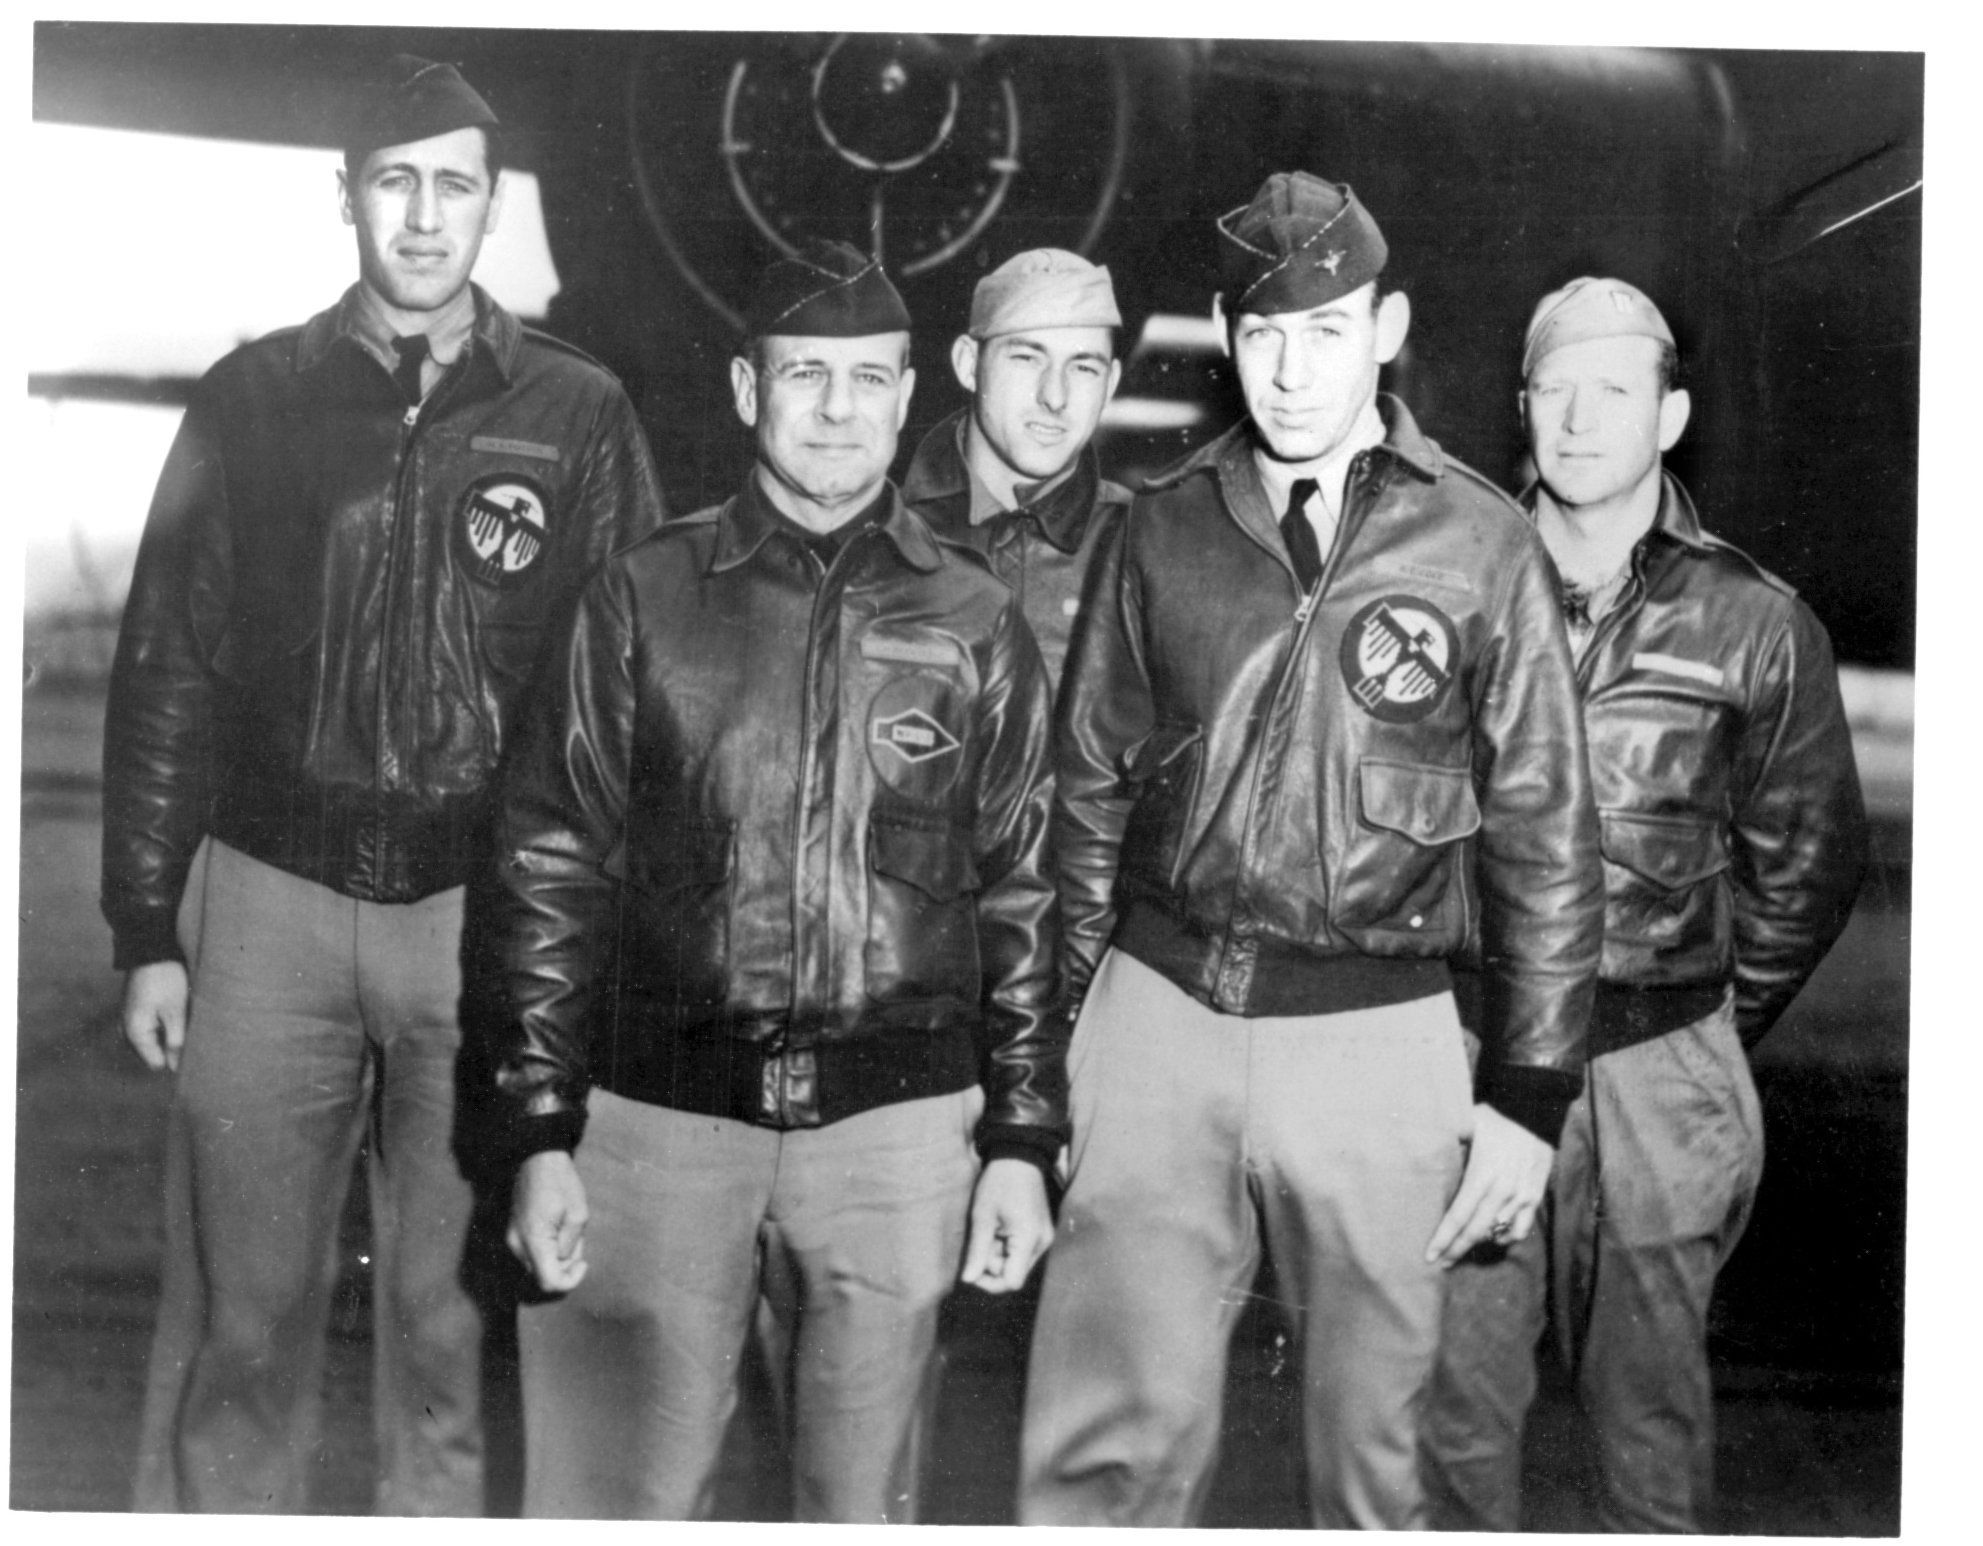 【vintage】40s USAAF  A-2 flight jacket